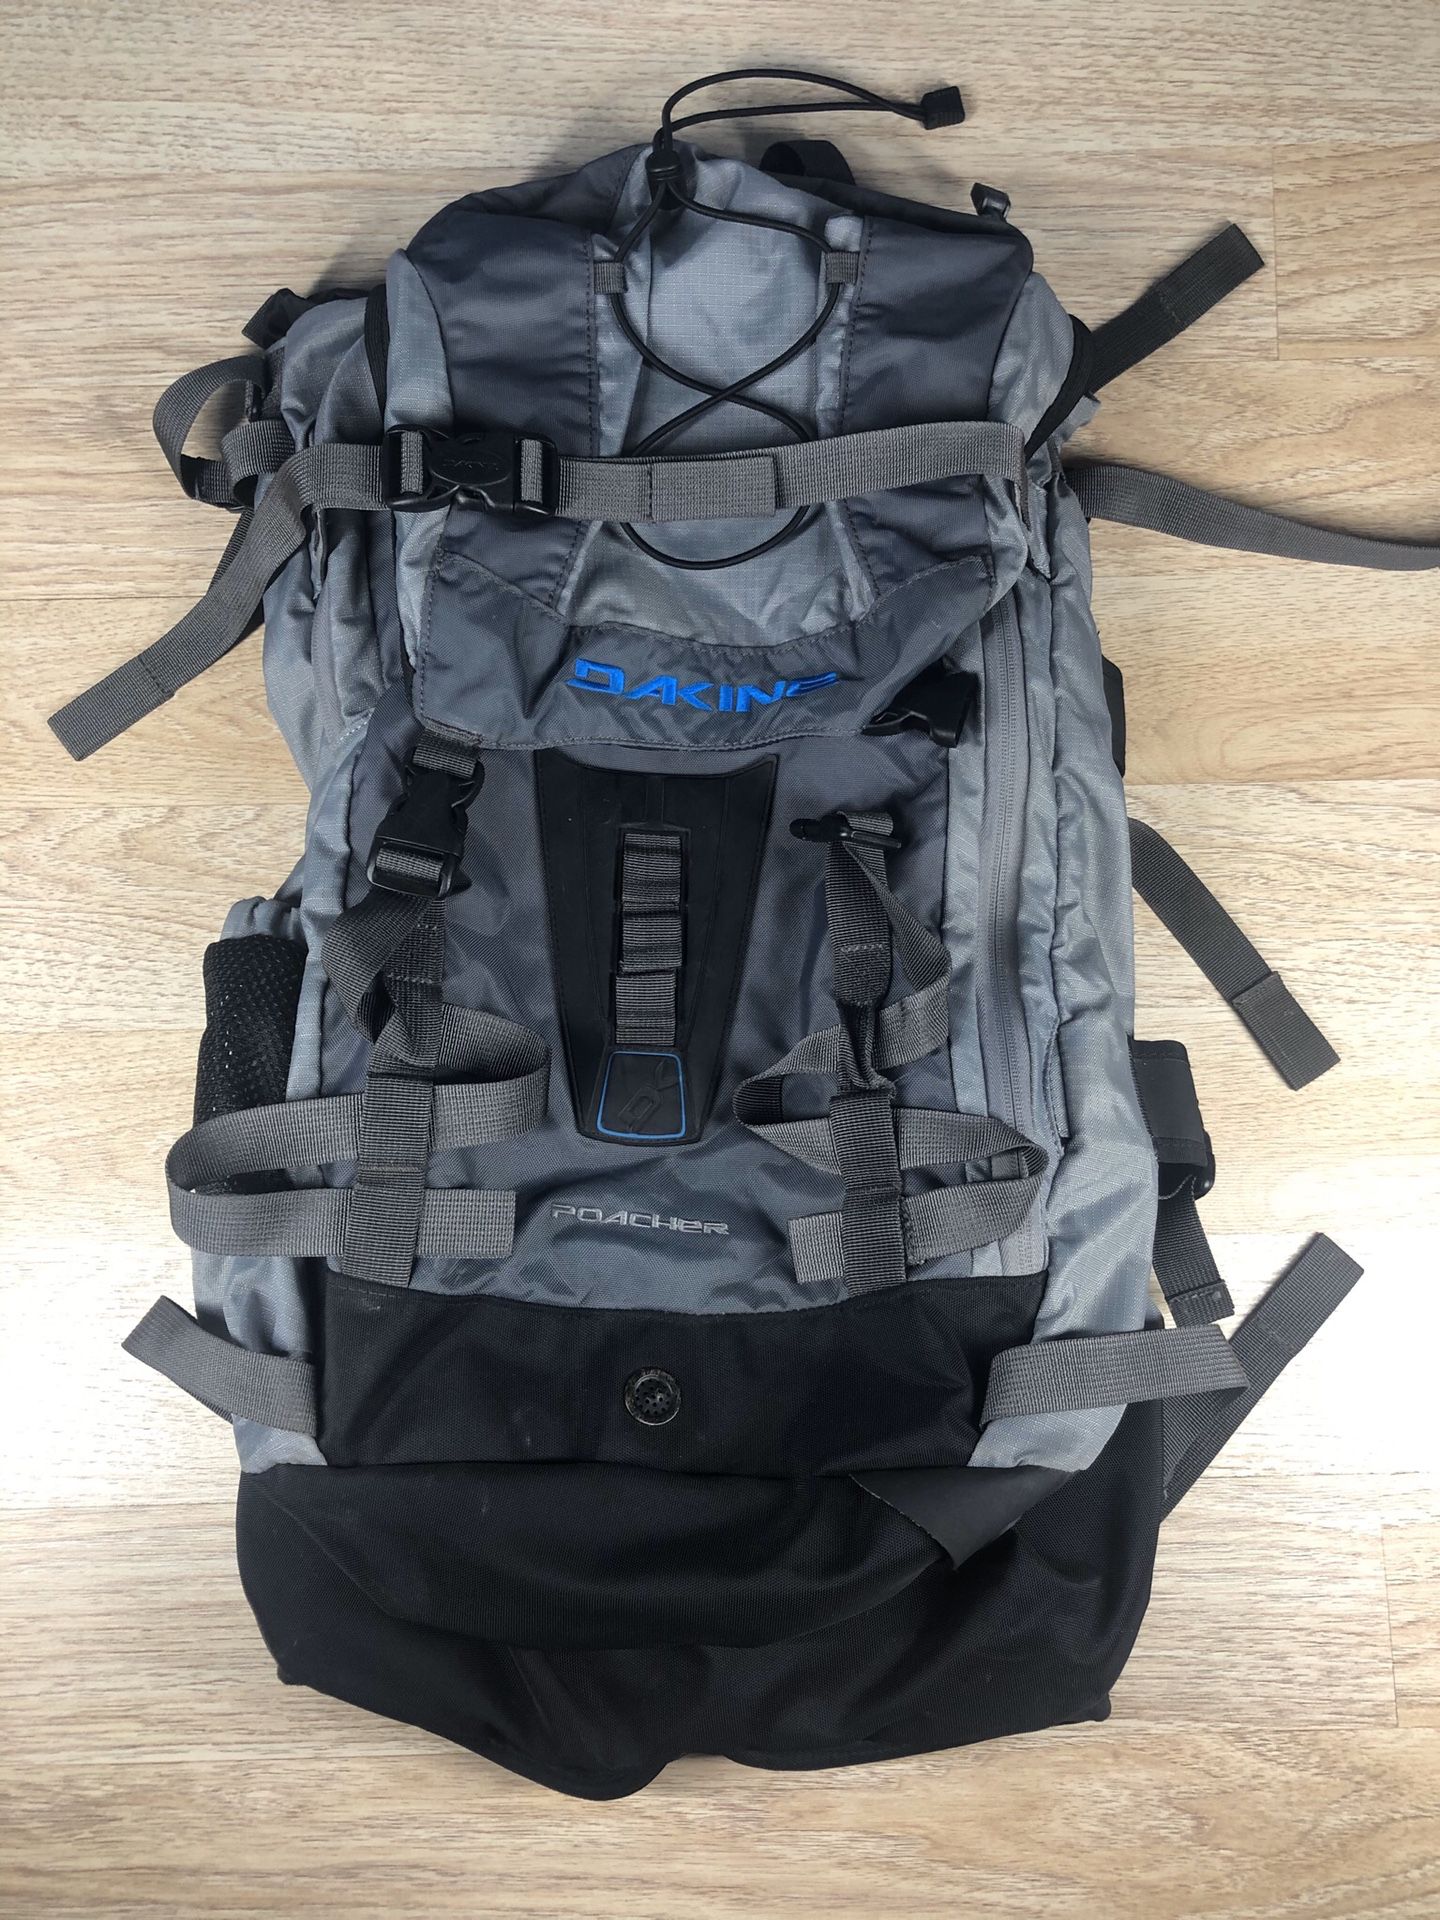 Dakine Special Backpack hiking Camping Snowboard Backpack 60L Grey/blue